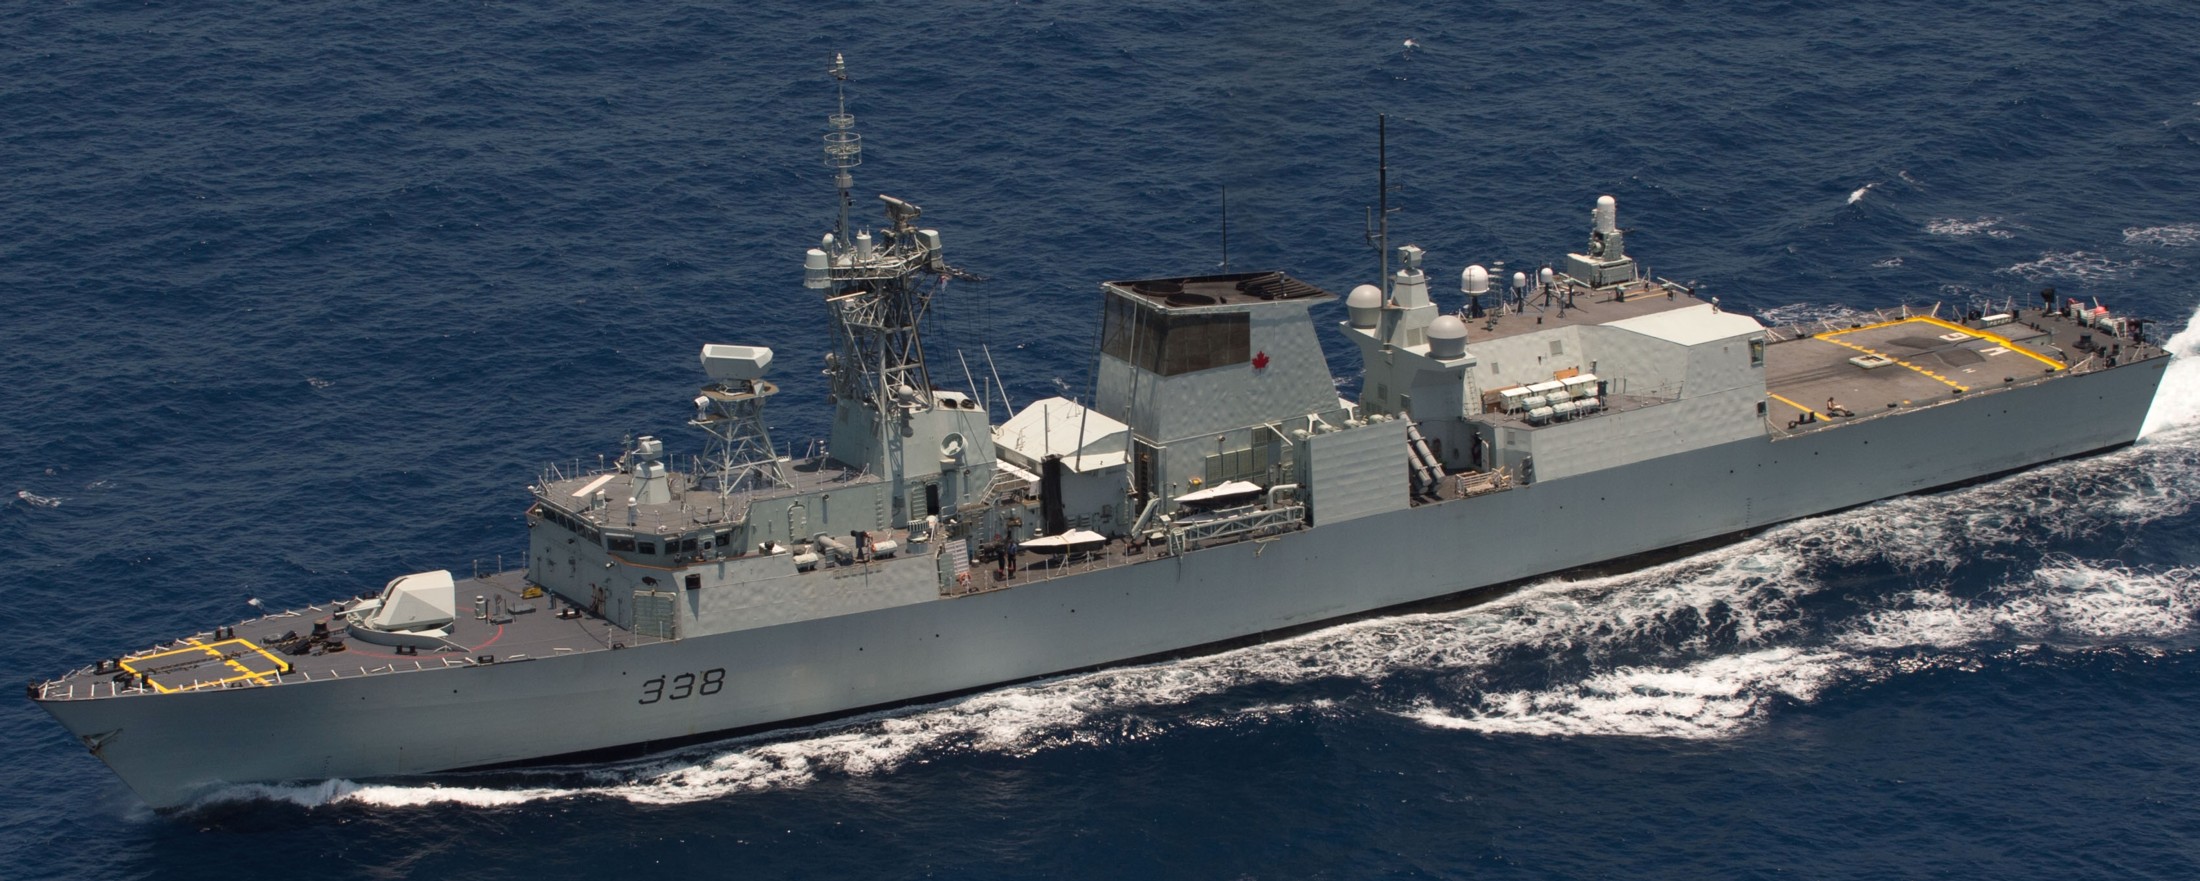 ffh-338 hmcs winnipeg halifax class helicopter patrol frigate ncsm royal canadian navy 38